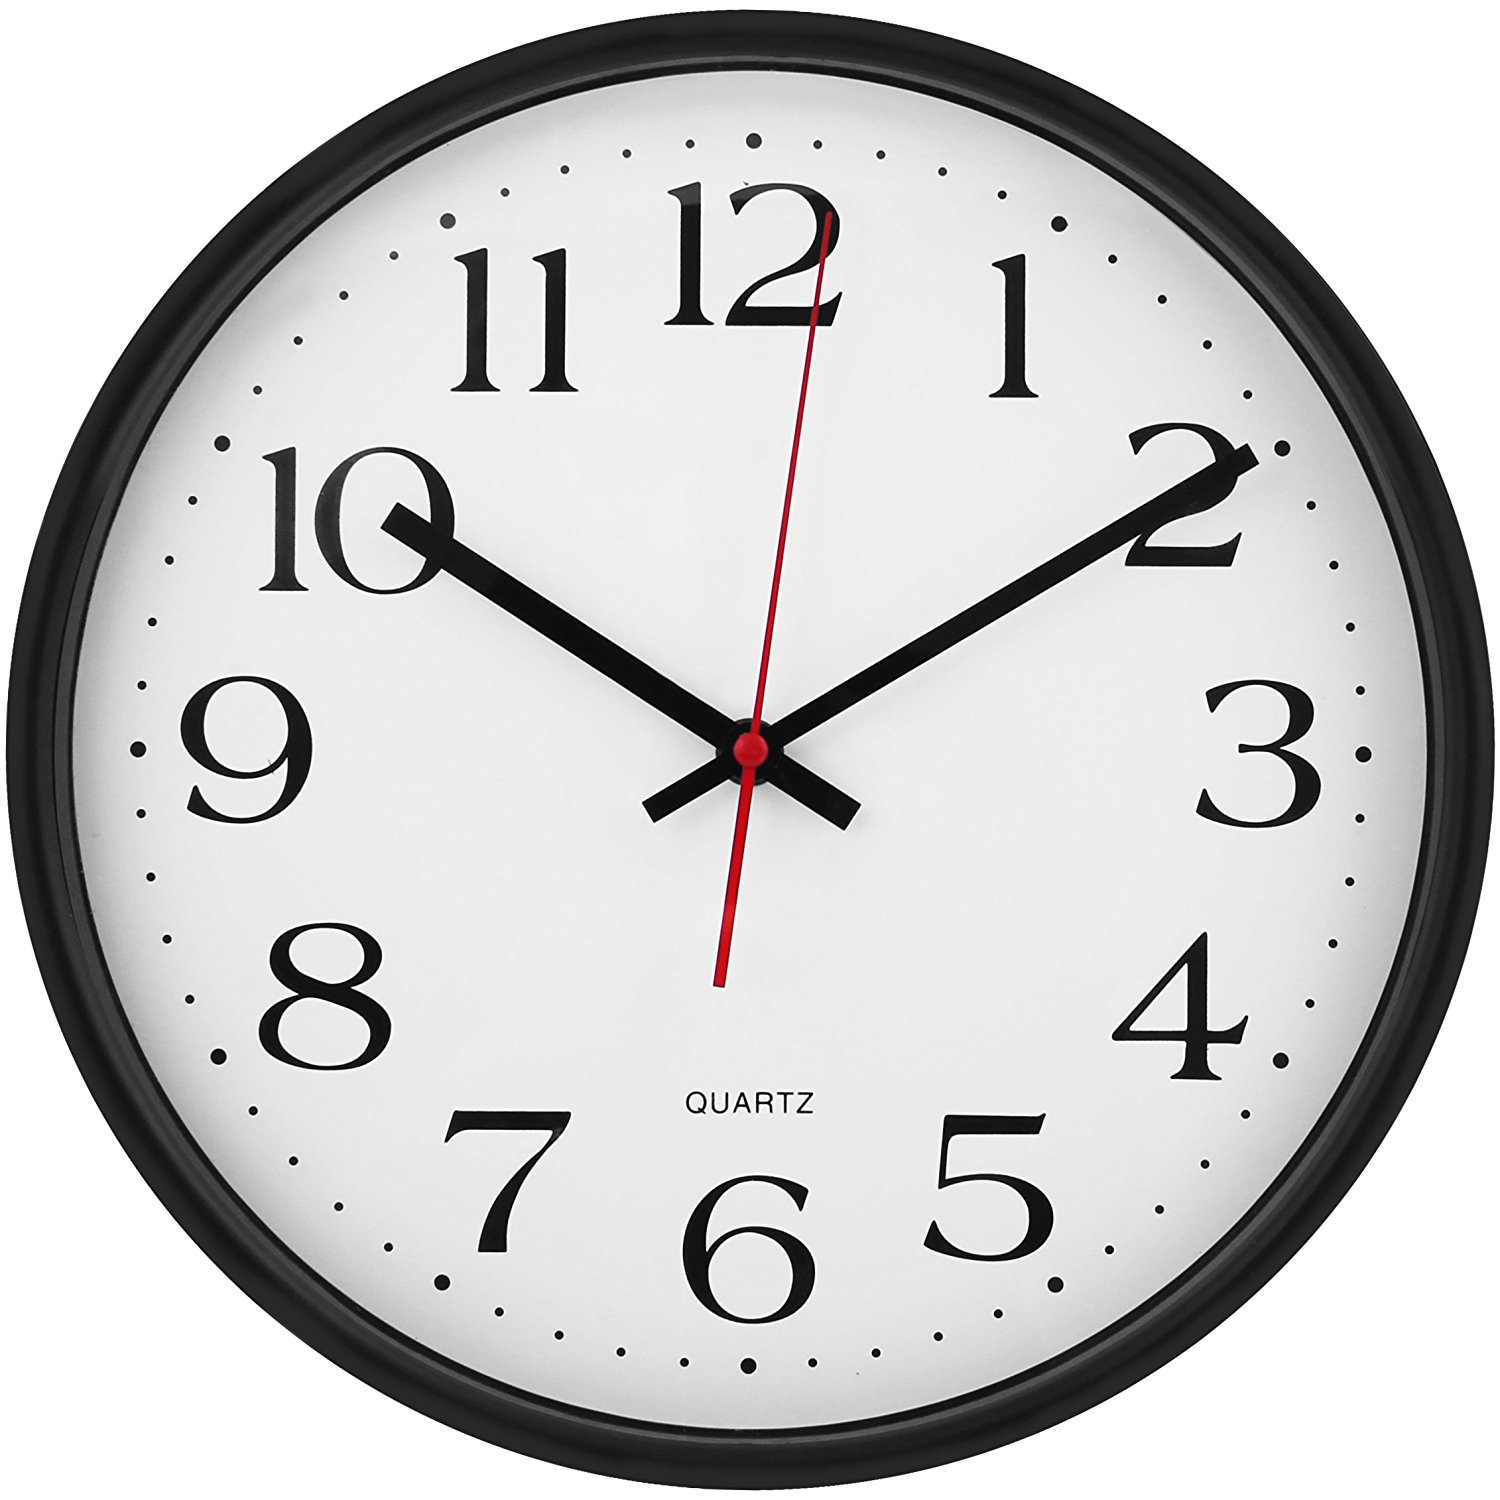 Amazon.com: Large Wall Clock Silent & Non-Ticking - Modern Quartz ...